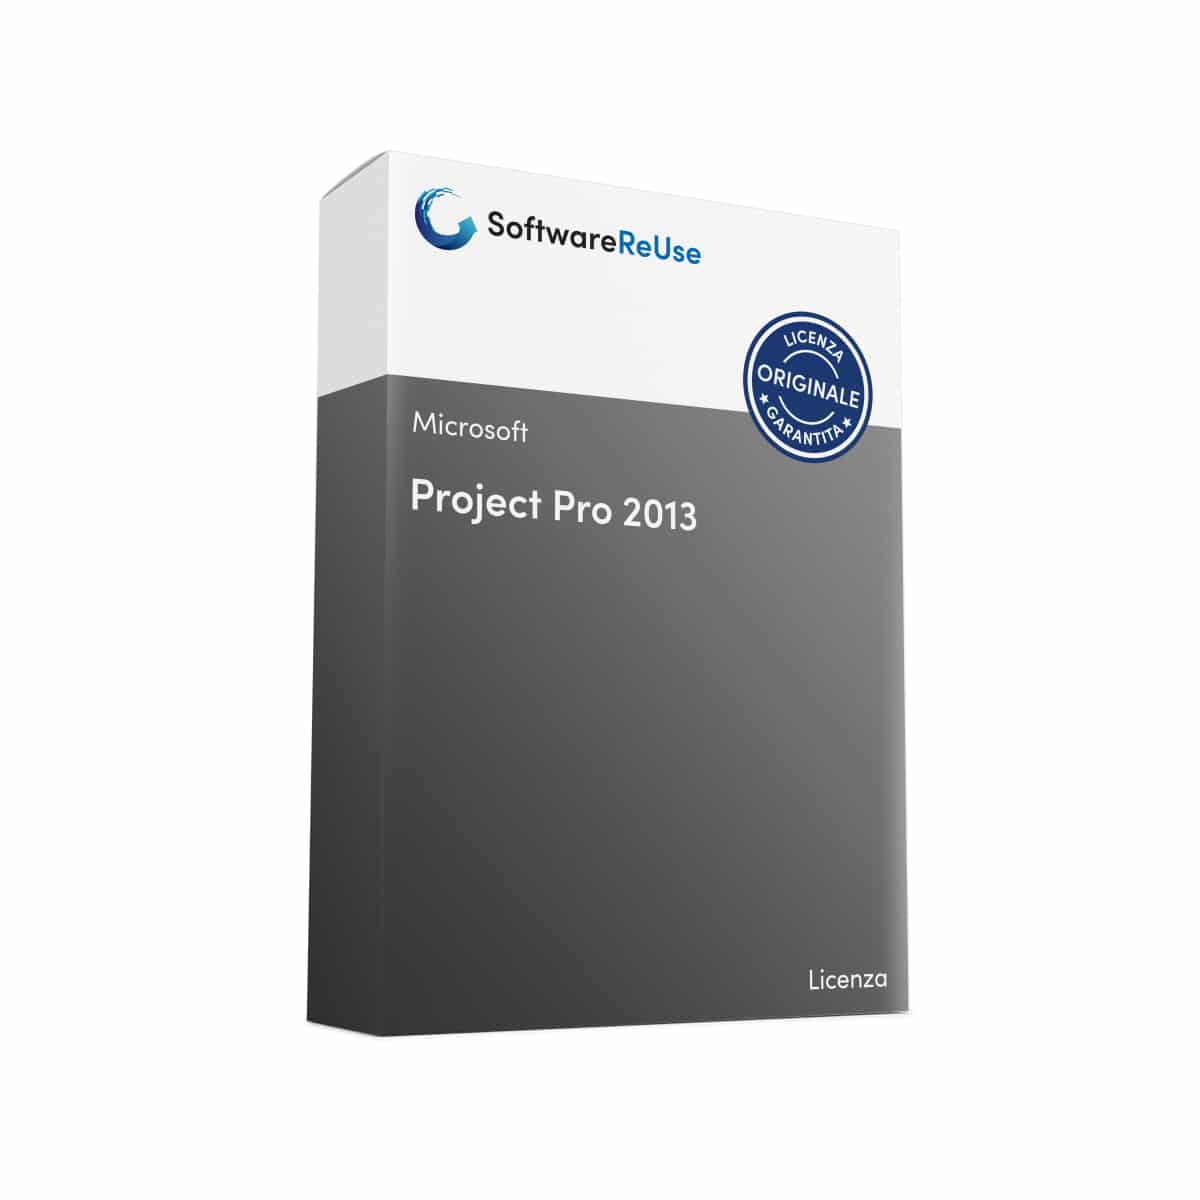 Project Pro 2013 – IT